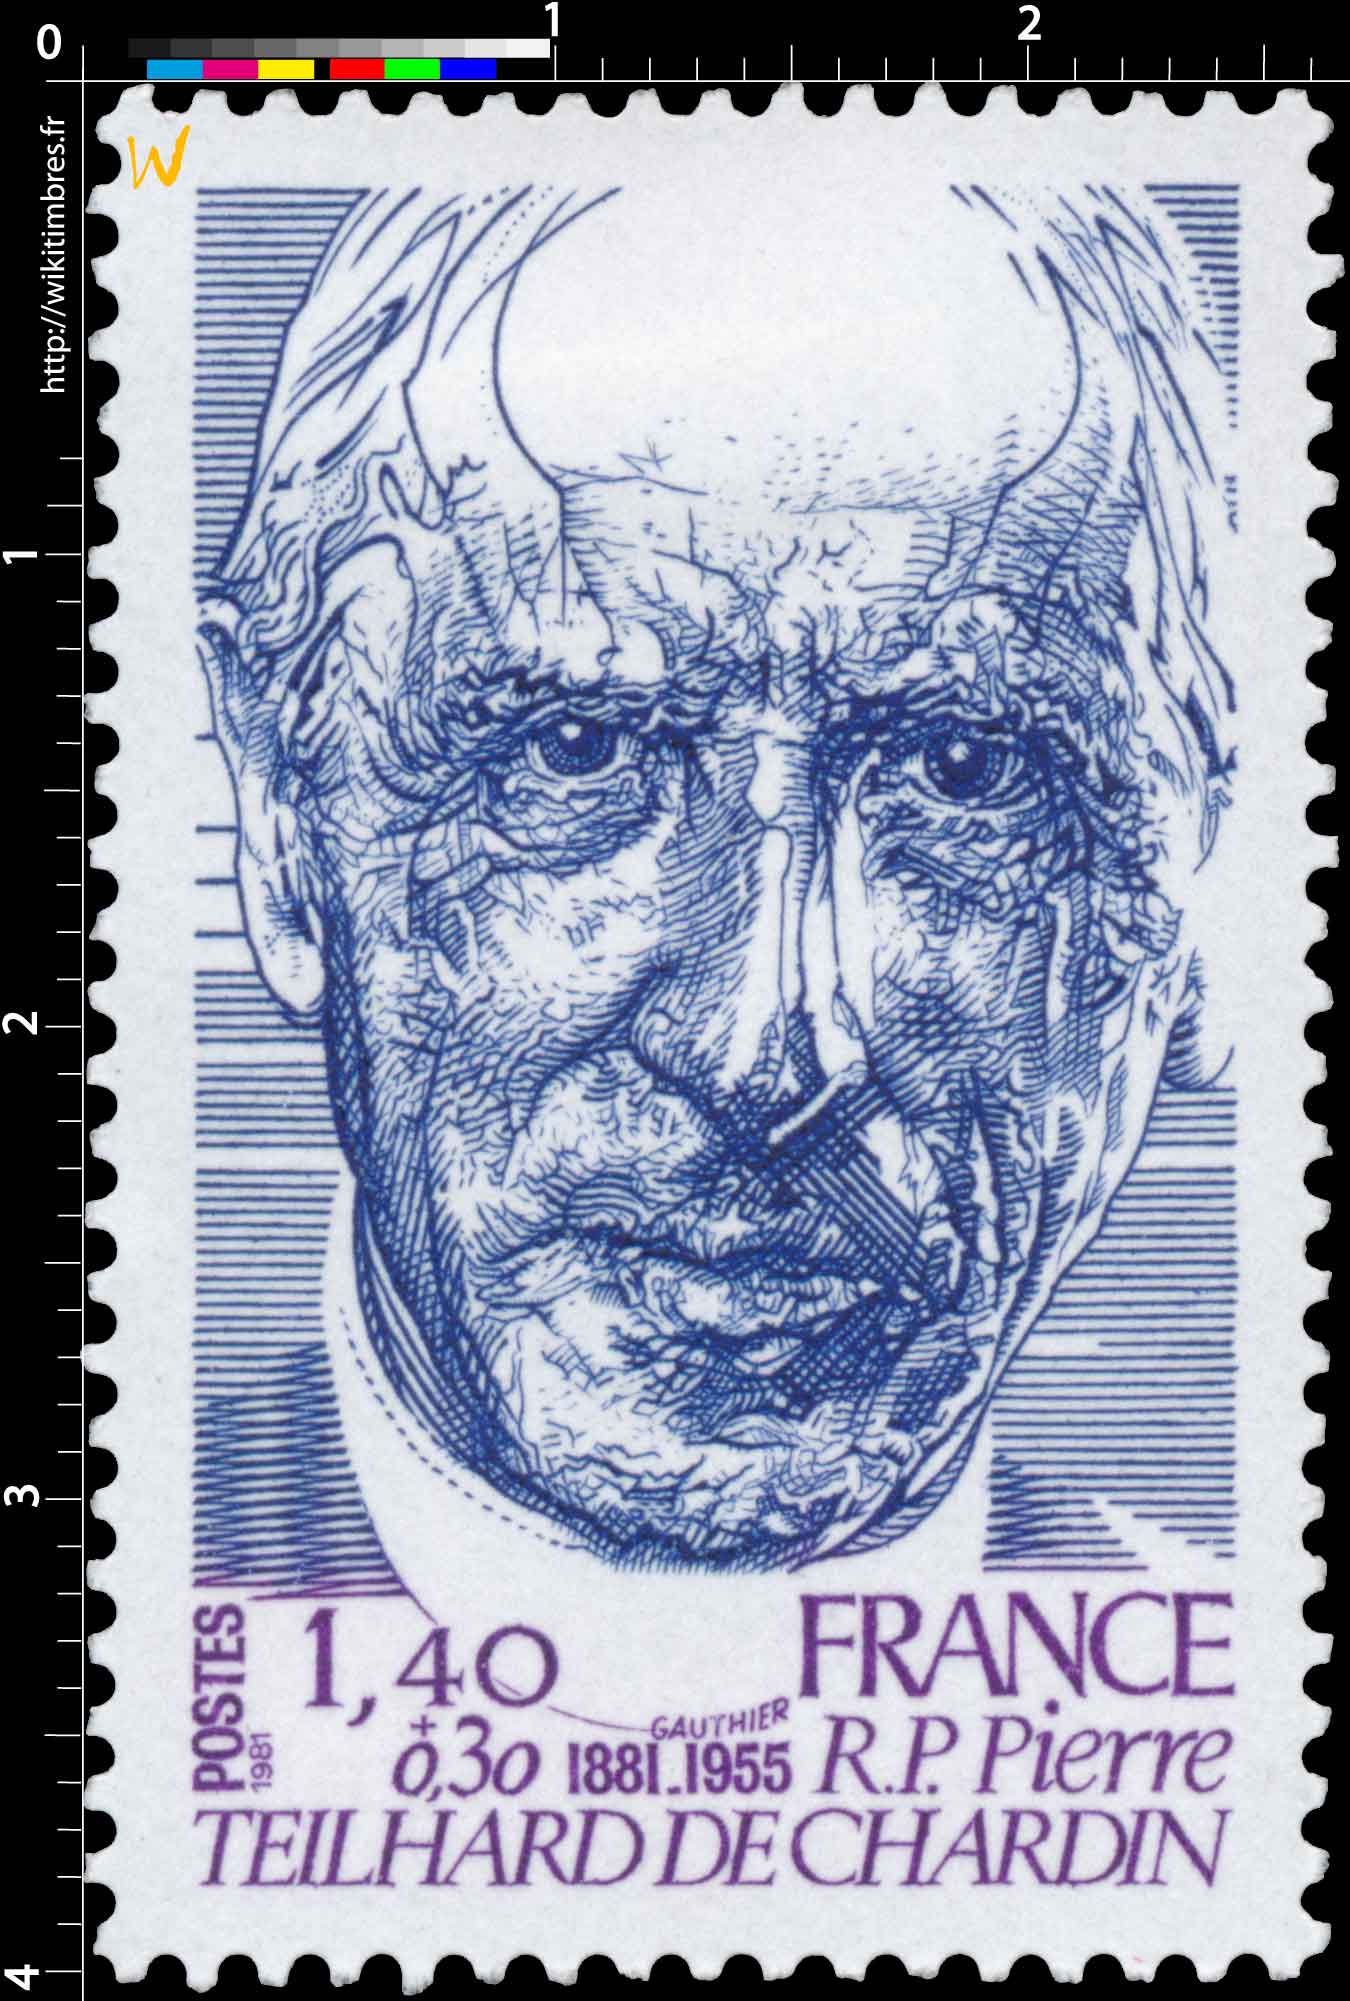 R.P Pierre TEILHARD DE CHARDIN 1881-1955